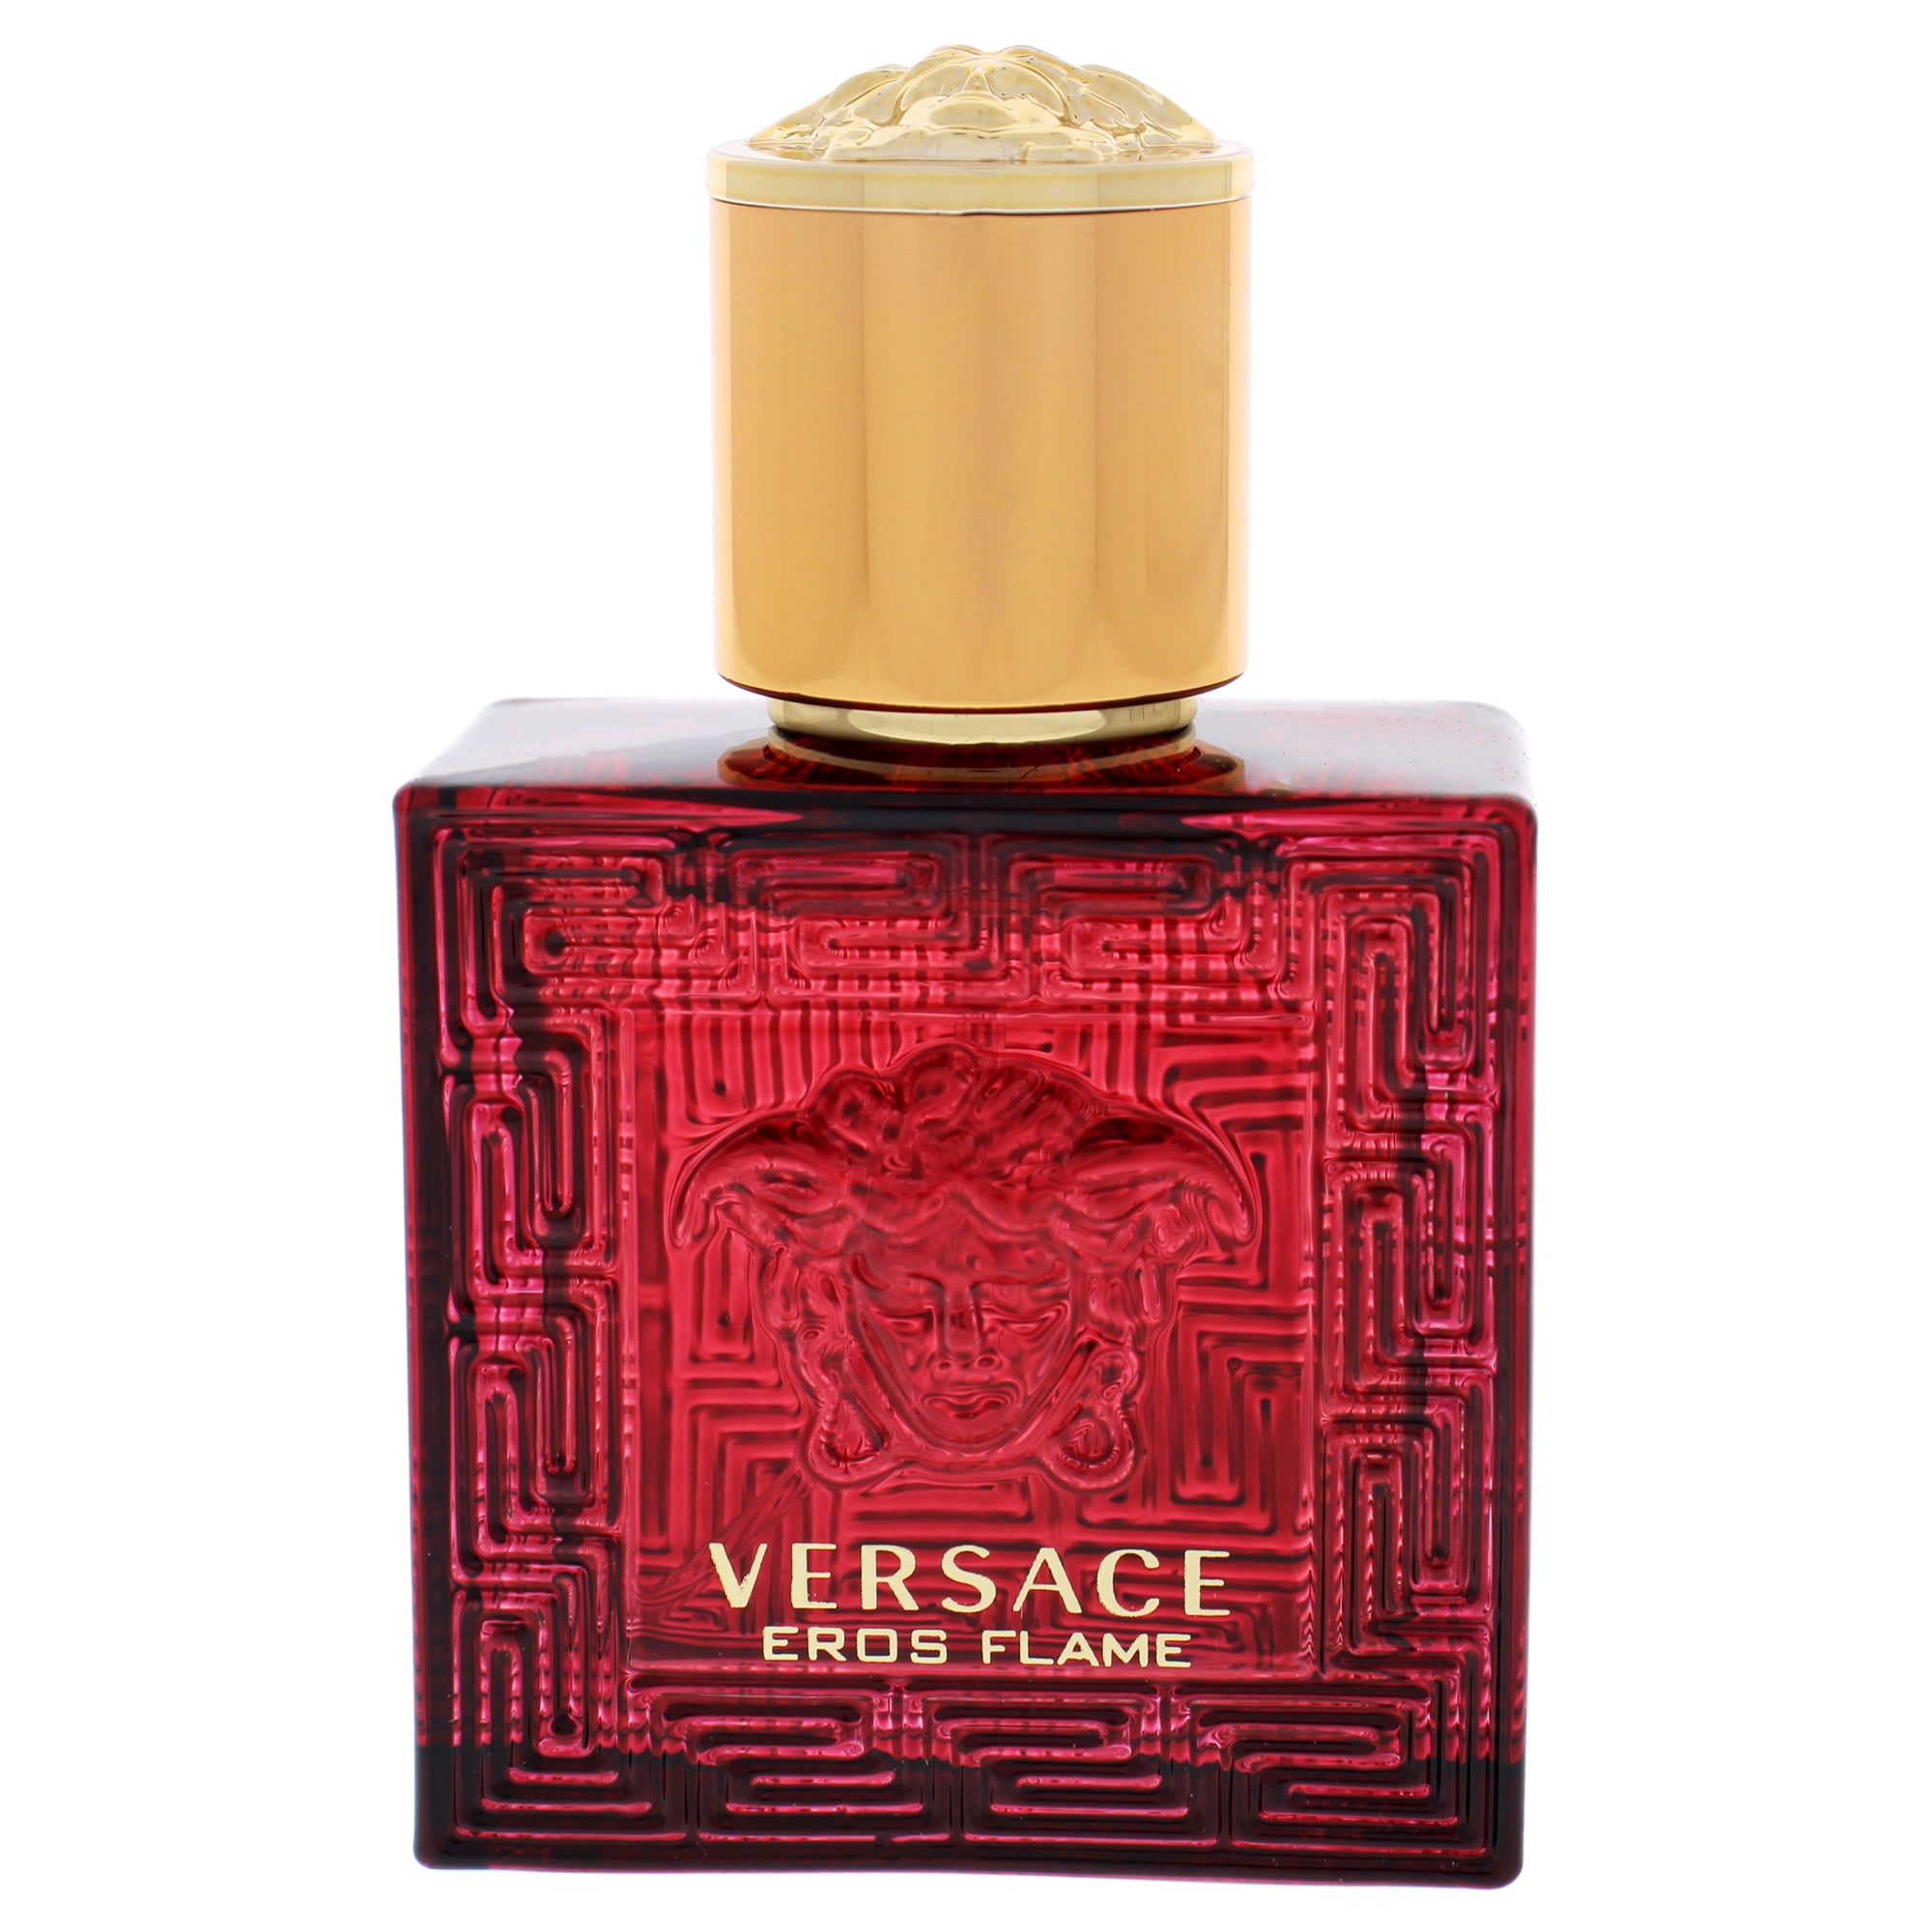 Versace Eros Flame Eau De Parfum 